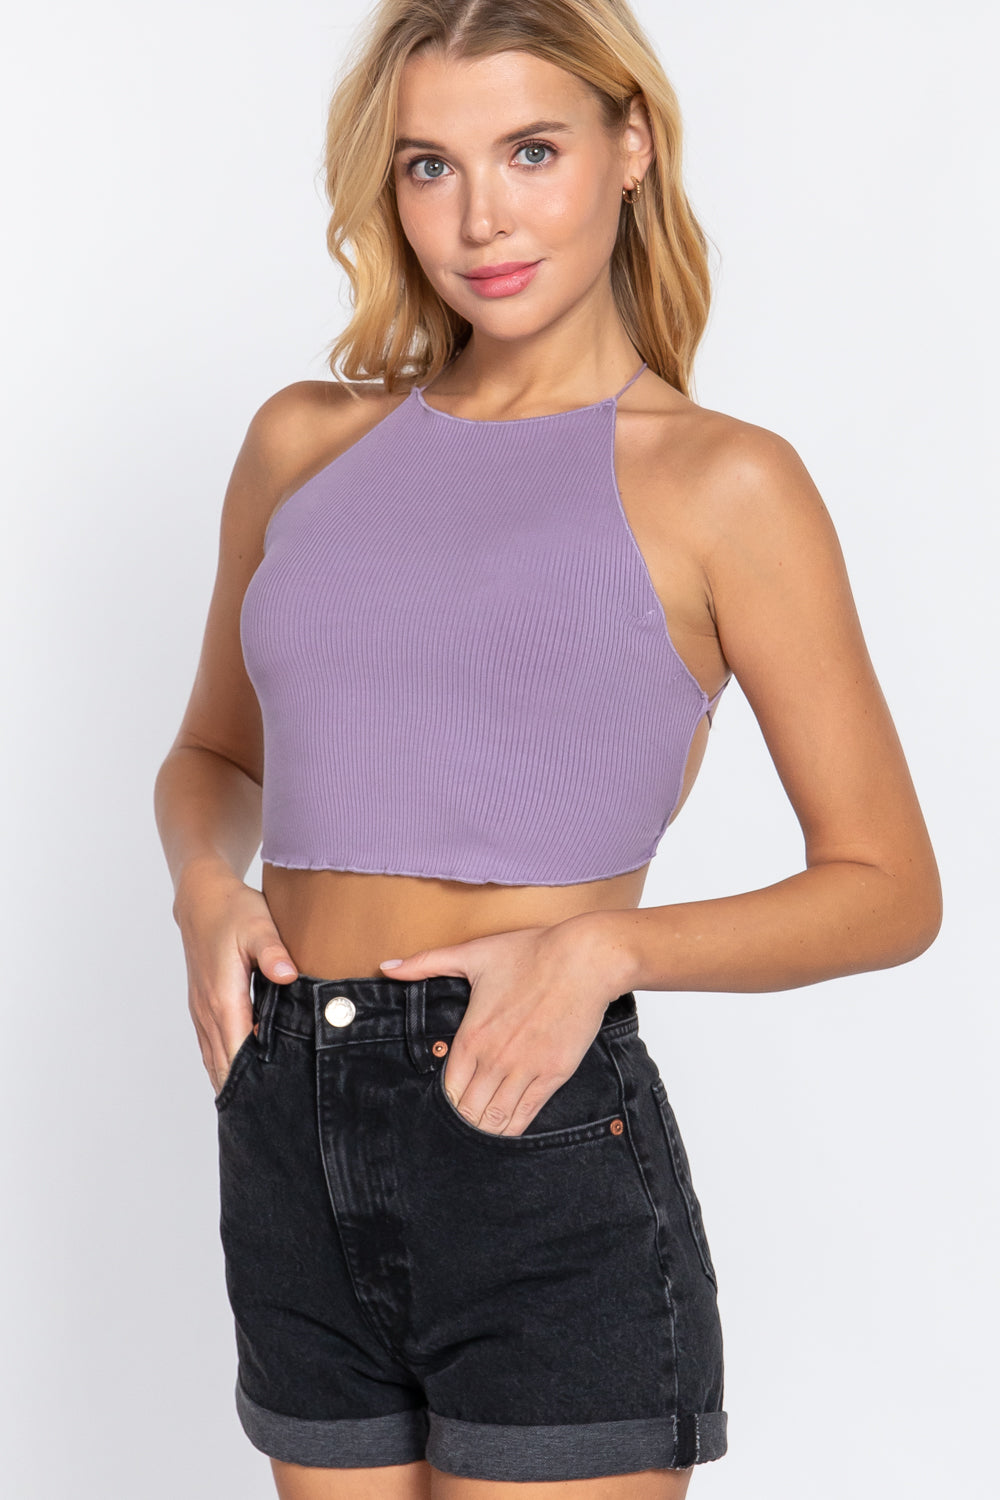 Misty Lavender Purple Lace Up Open Cross Back Crop Cami Top Shirts & Tops jehouze 